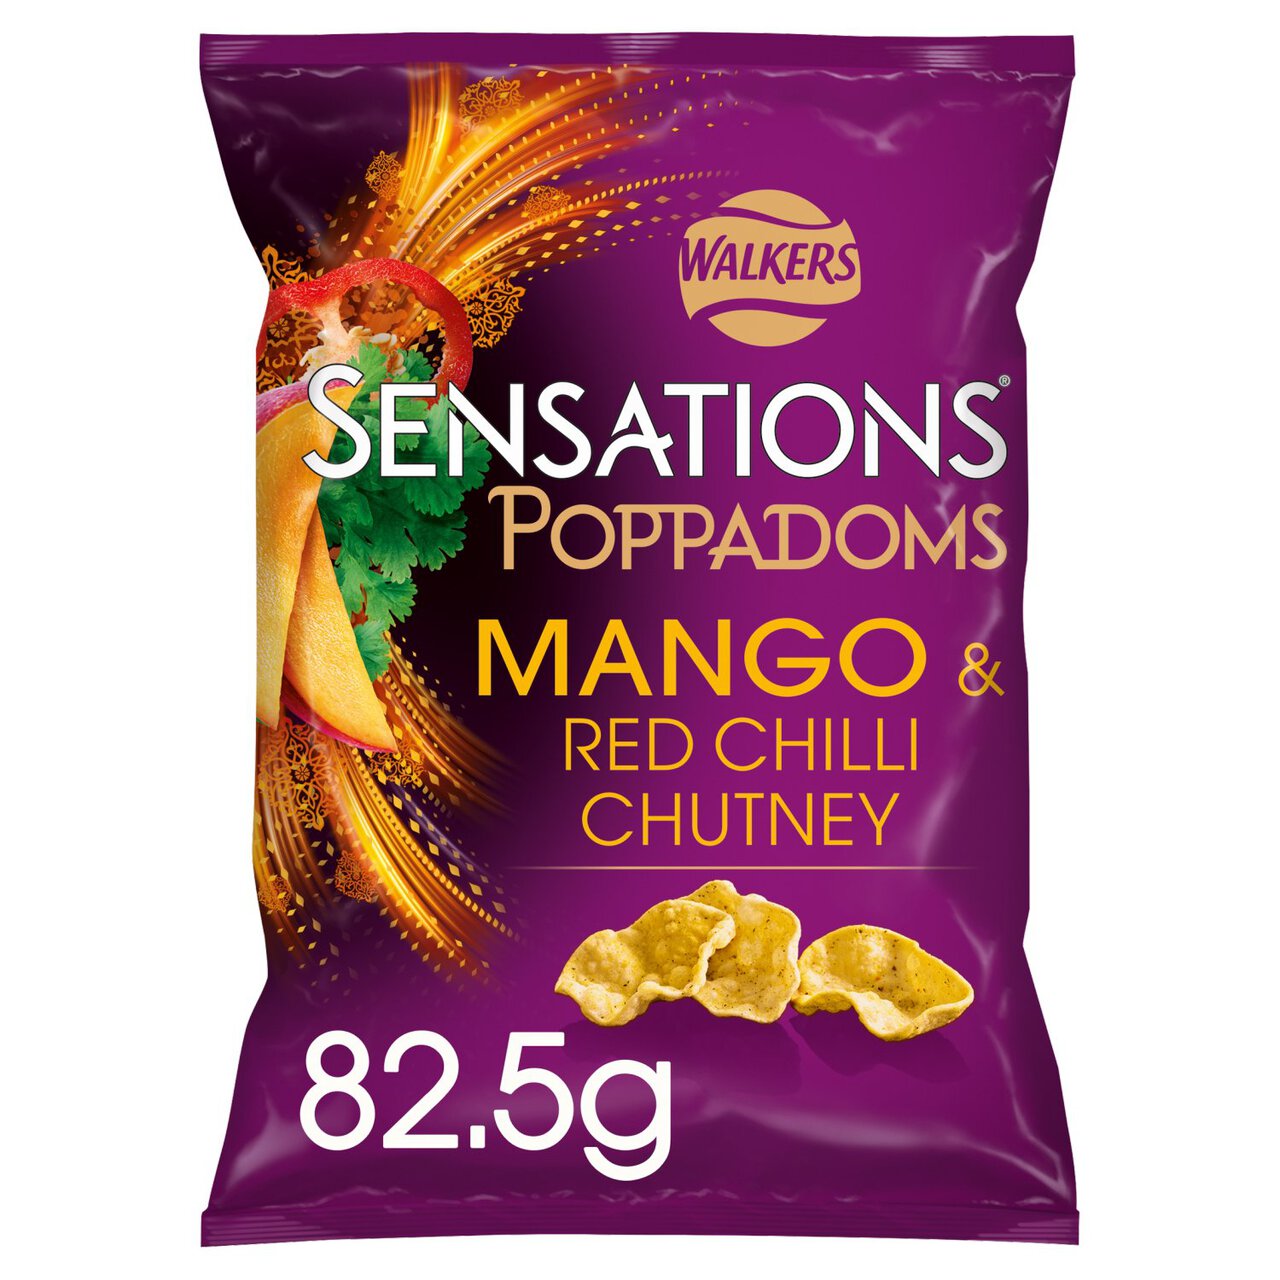 Sensations Mango & Chilli Chutney Sharing Bag Poppadoms 82.5g